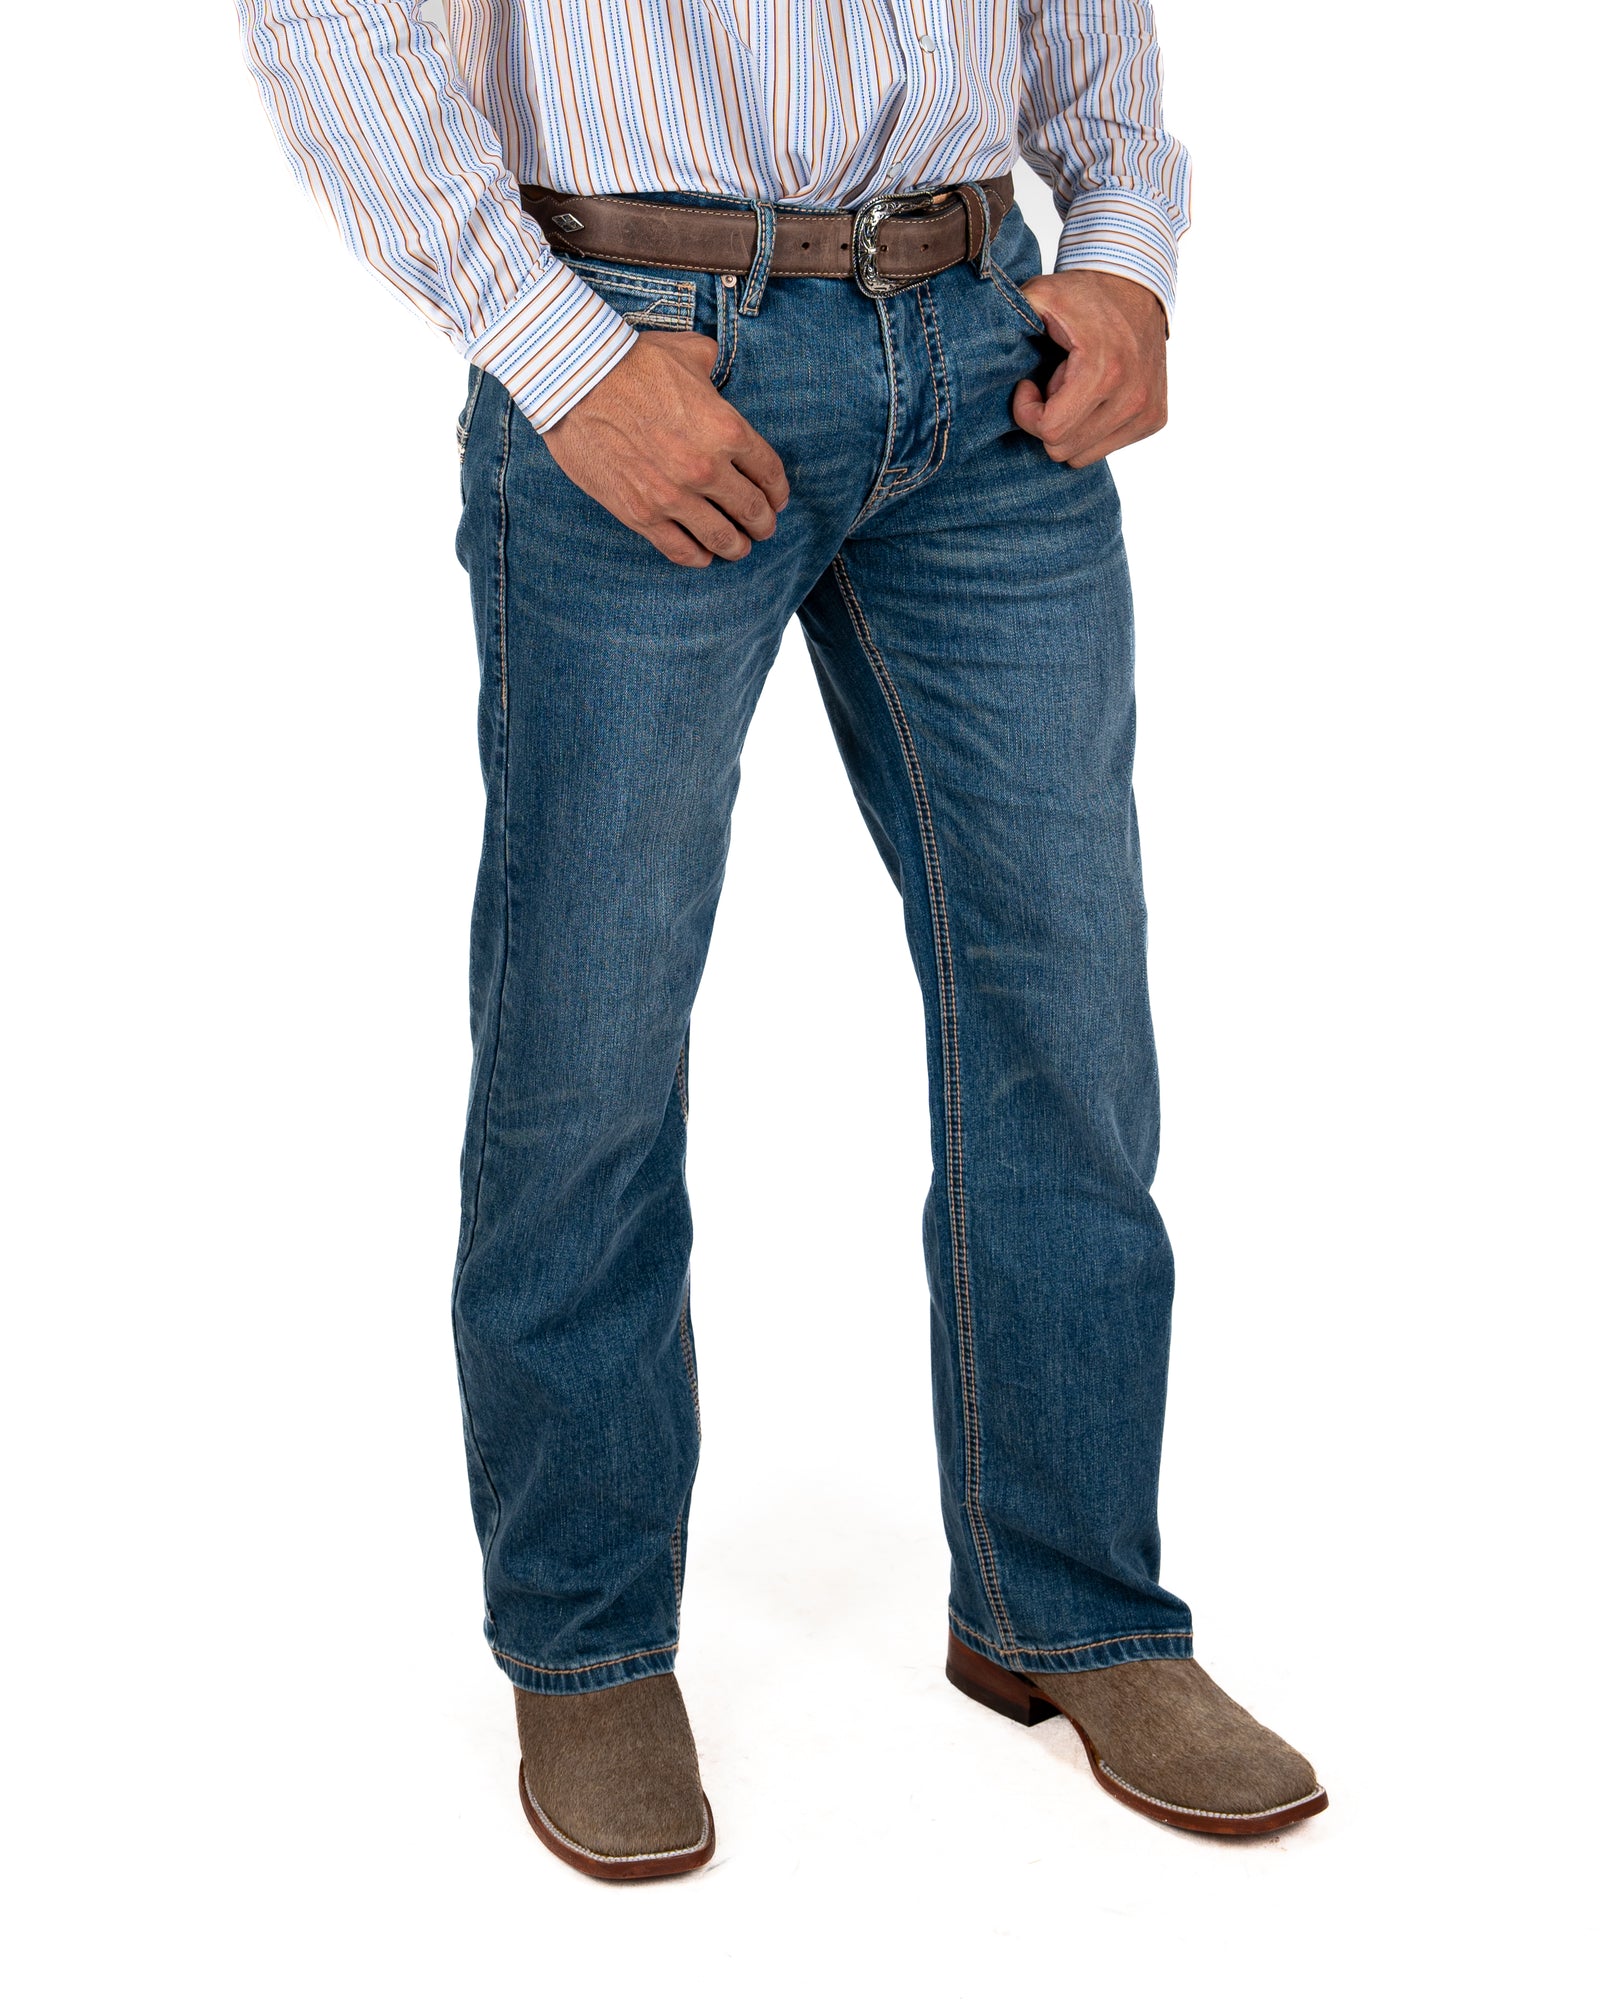 Jeans Wrangler Original Fit Prewashed Tan Caballero